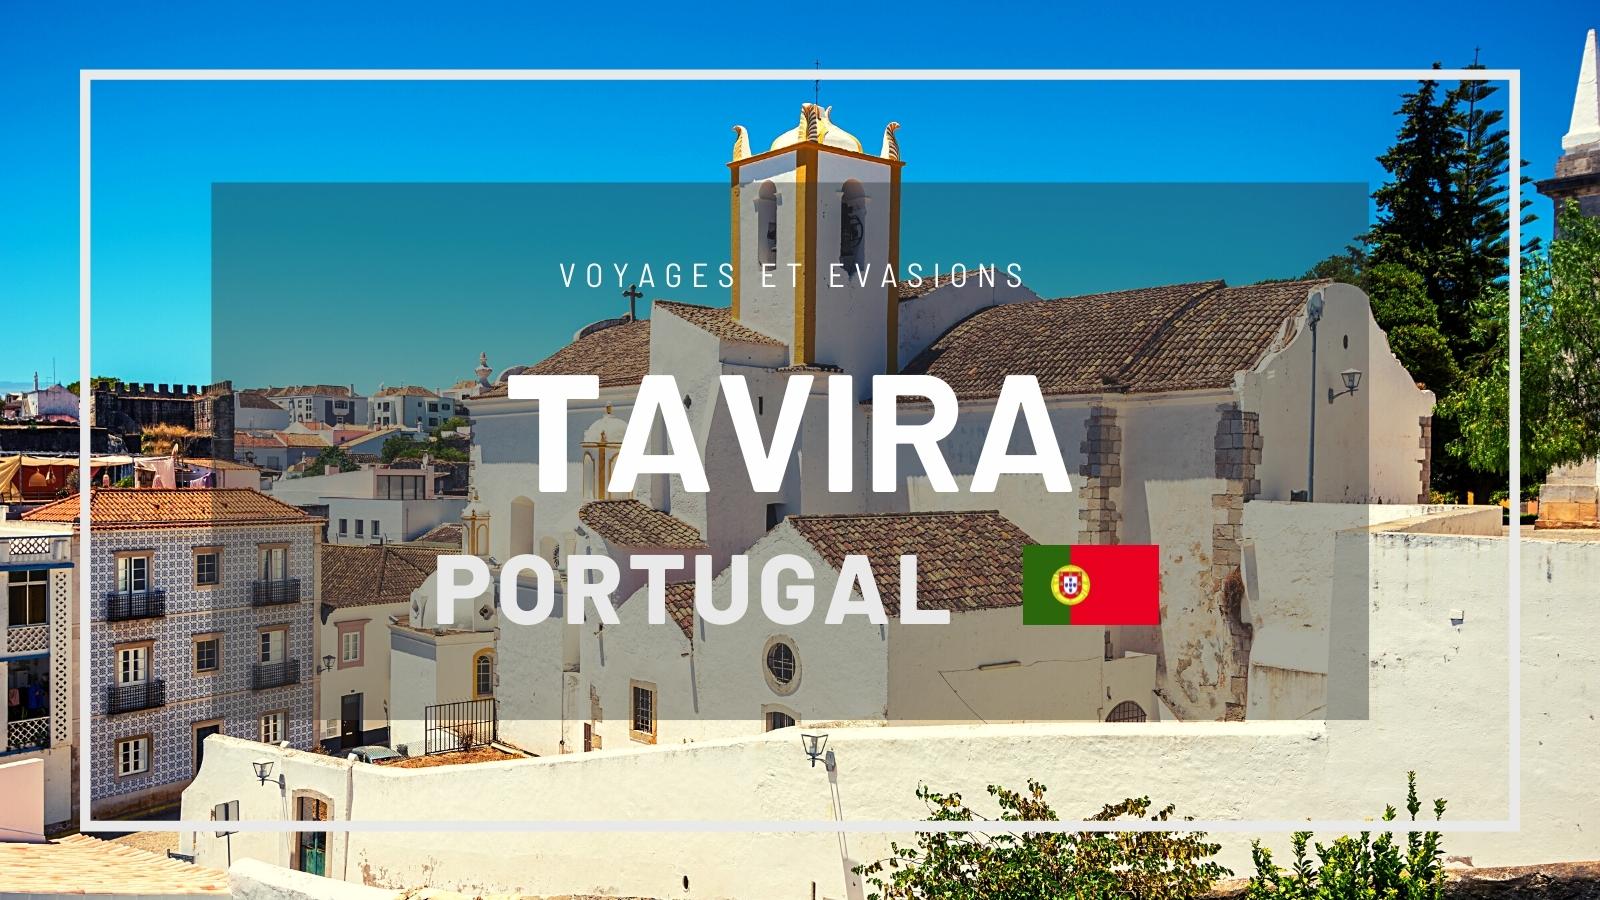 Tavira au Portugal